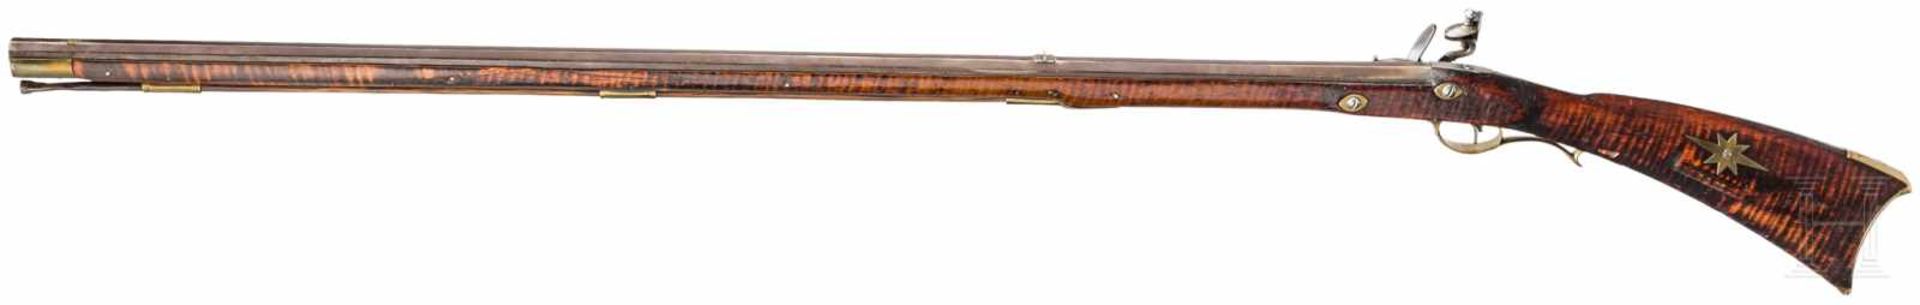 Kentucky-/Pennsylvania-Rifle, USA, um 1840Glatter Oktagonallauf im Kaliber 12,5 mm, Seele rau und - Bild 2 aus 2